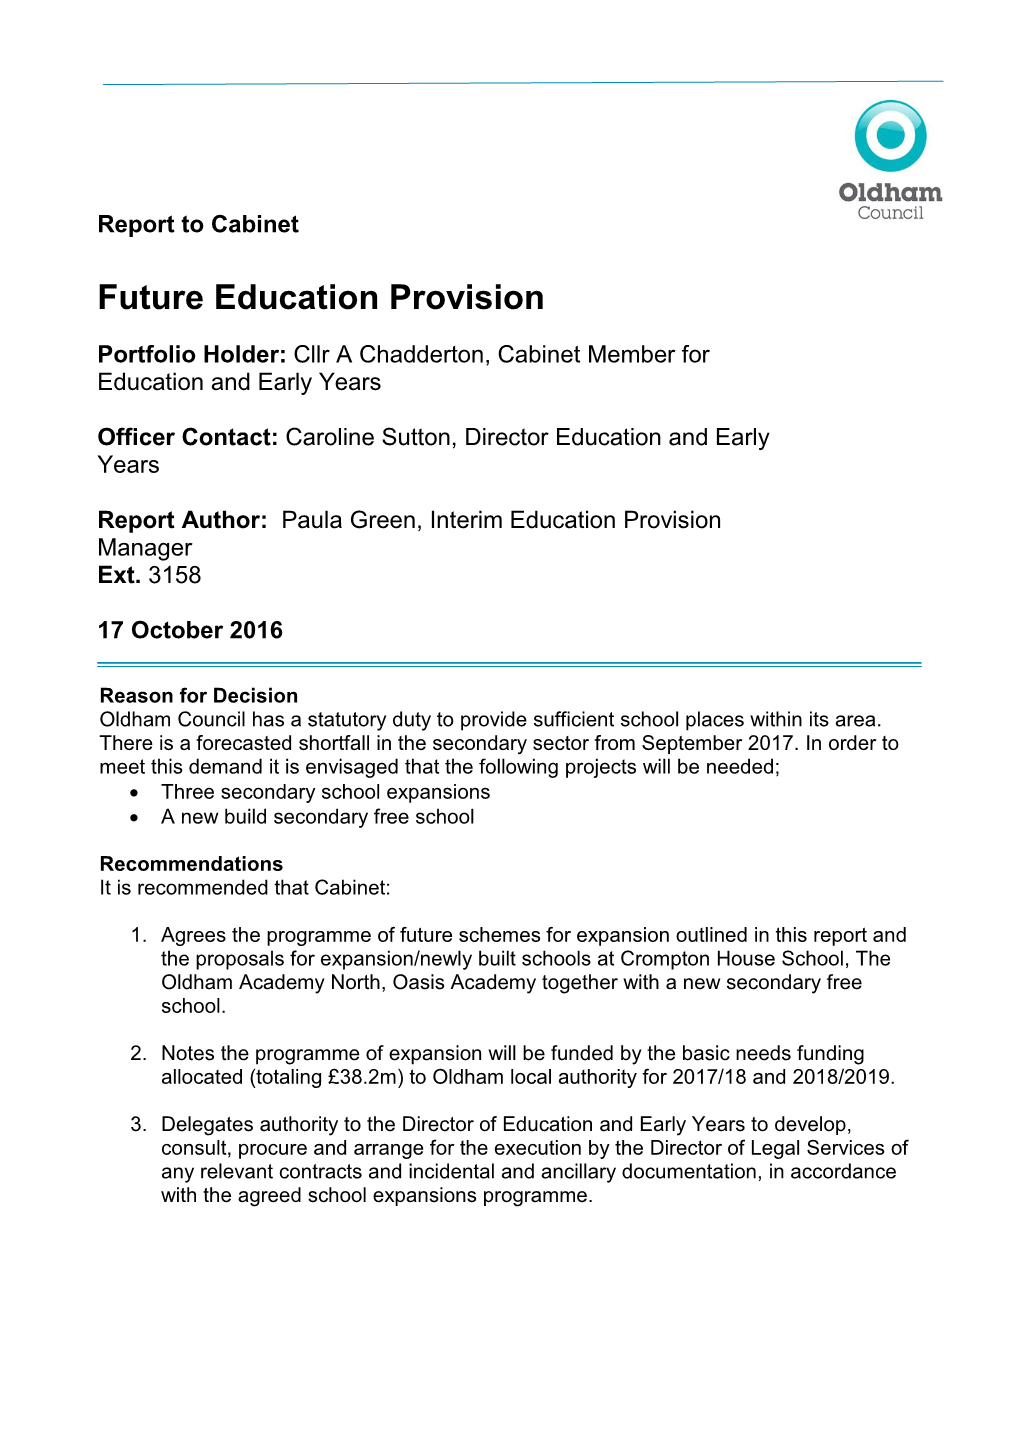 Future Education Provision